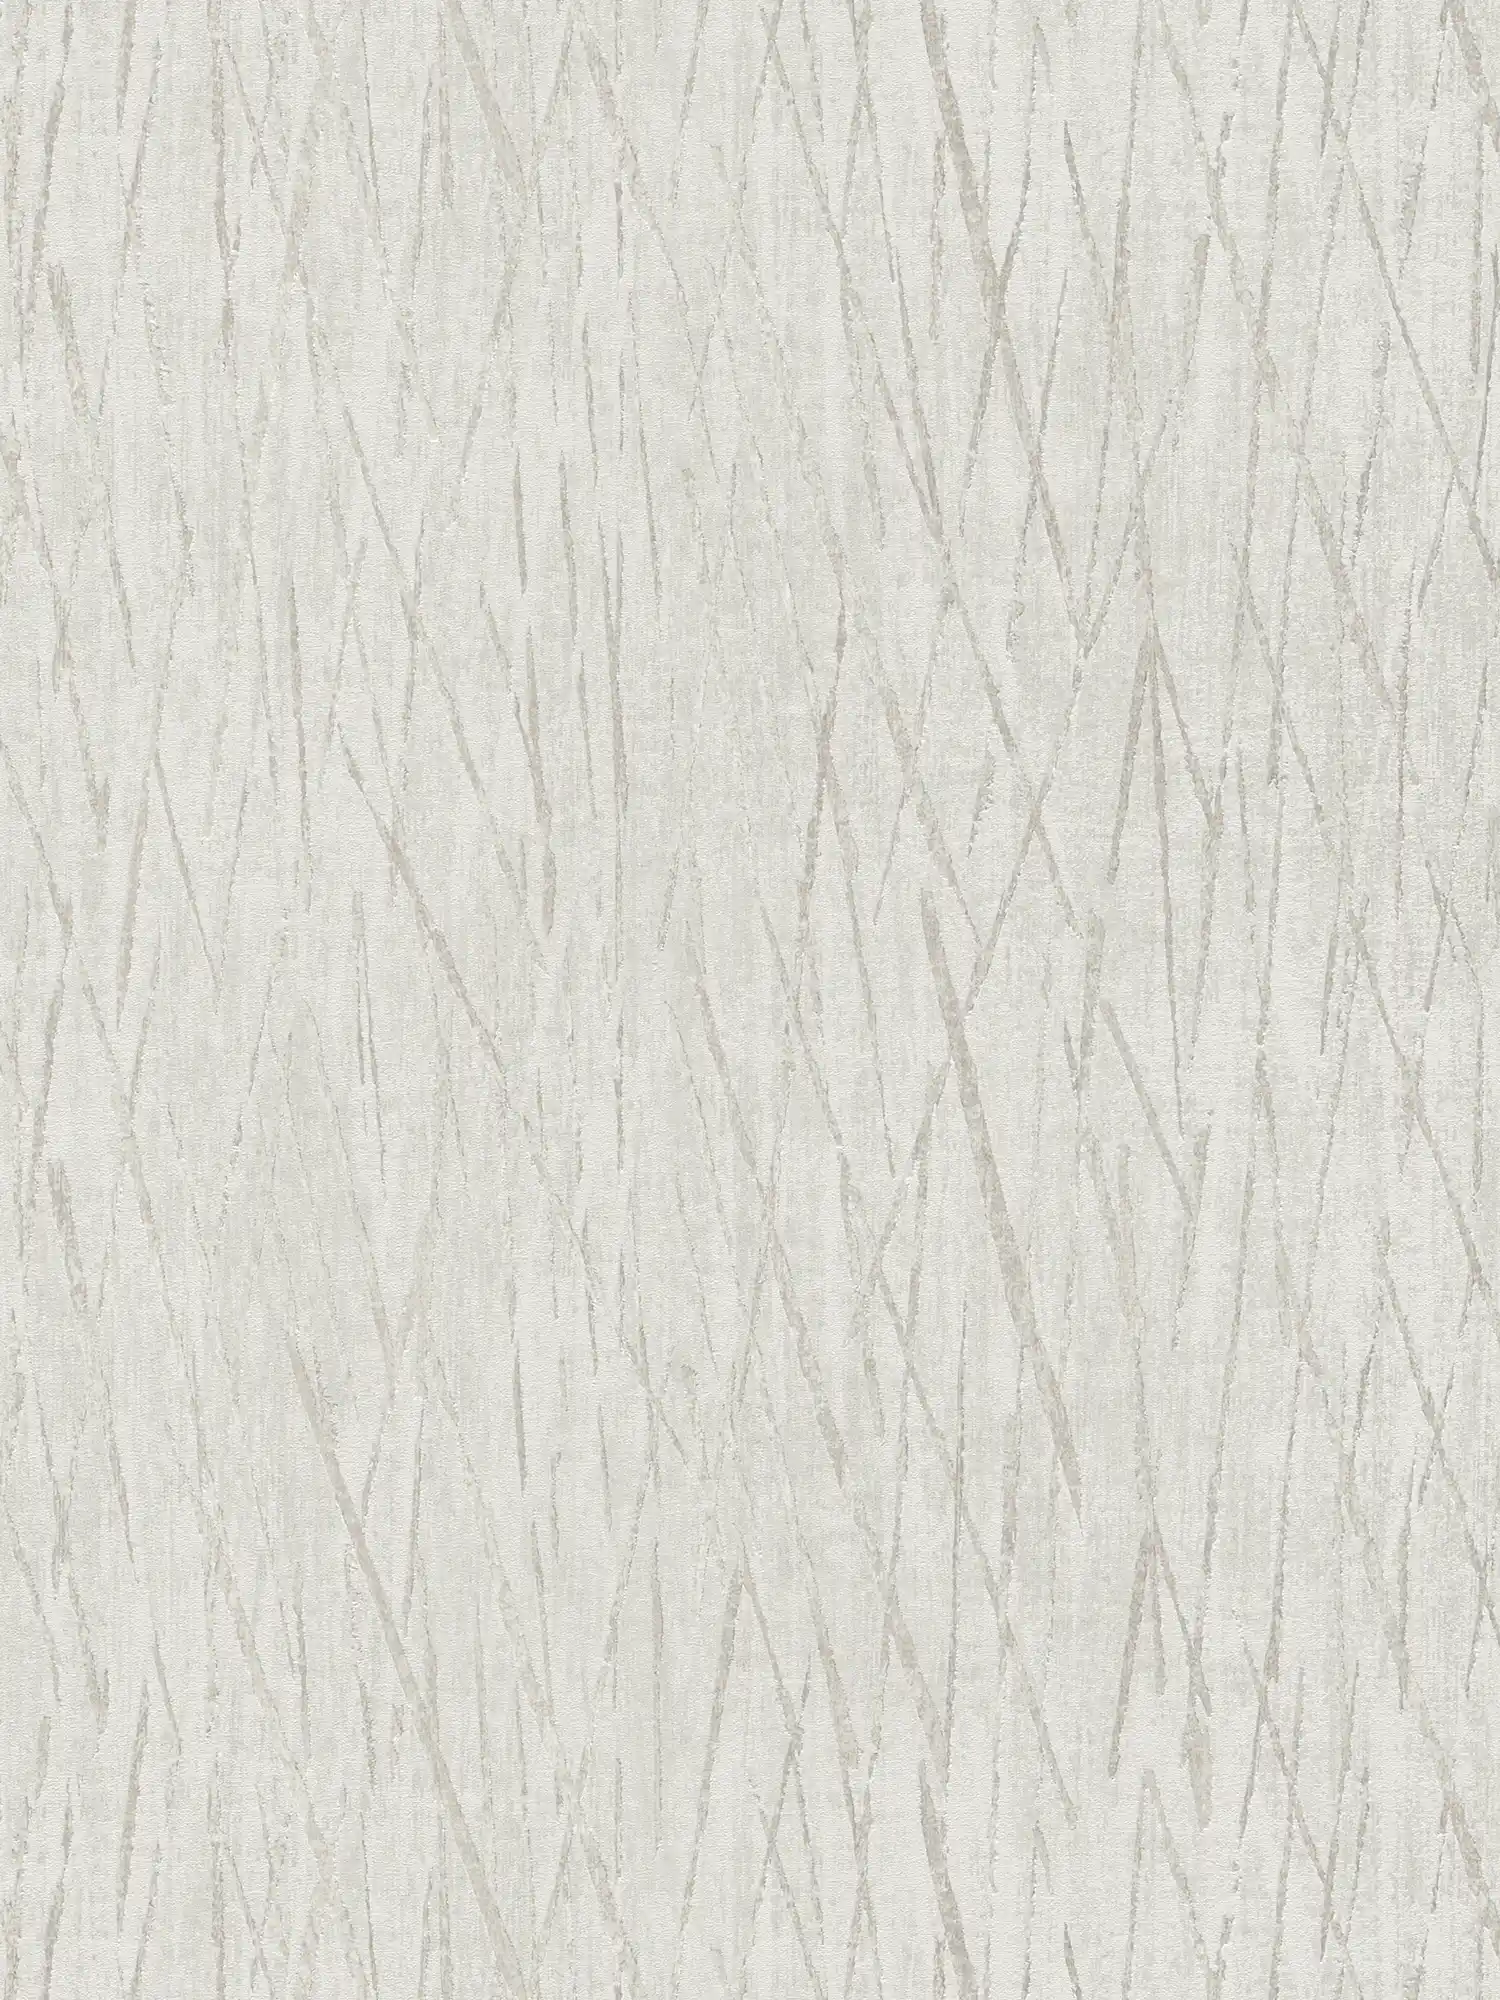 Naturdesign Tapete meliert mit Metallic Farbe – Grau
